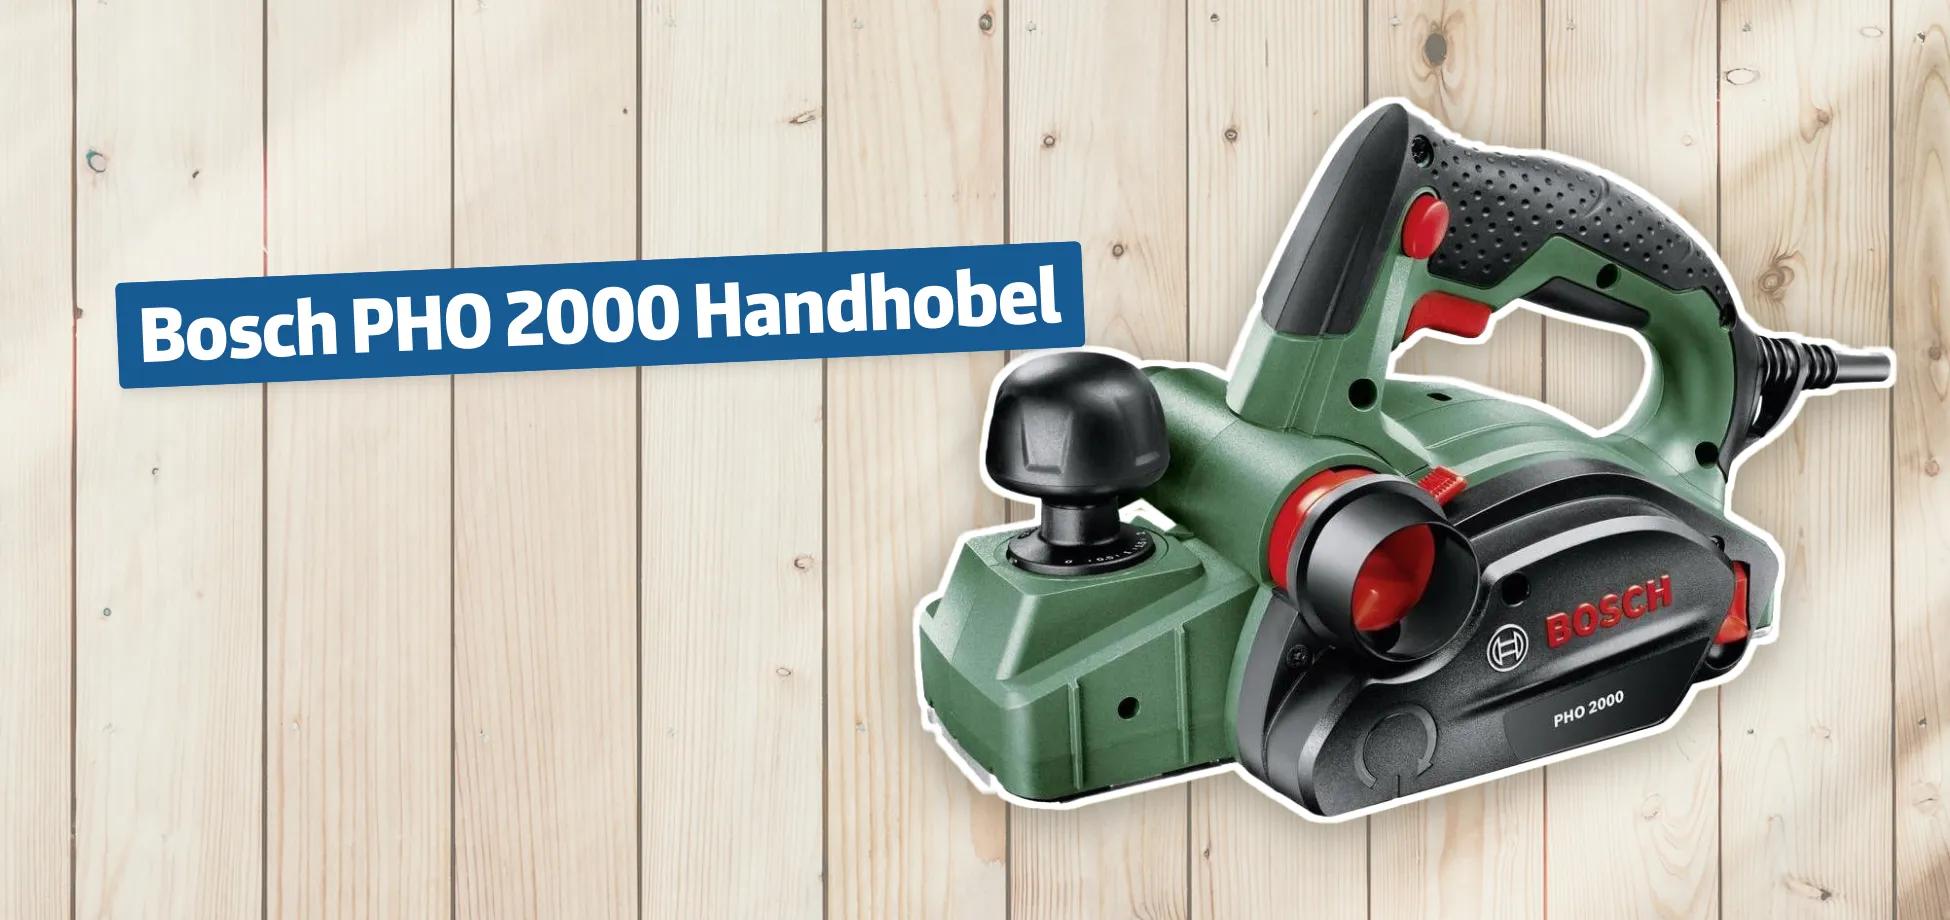 Bosch PHO 2000 Handhobel